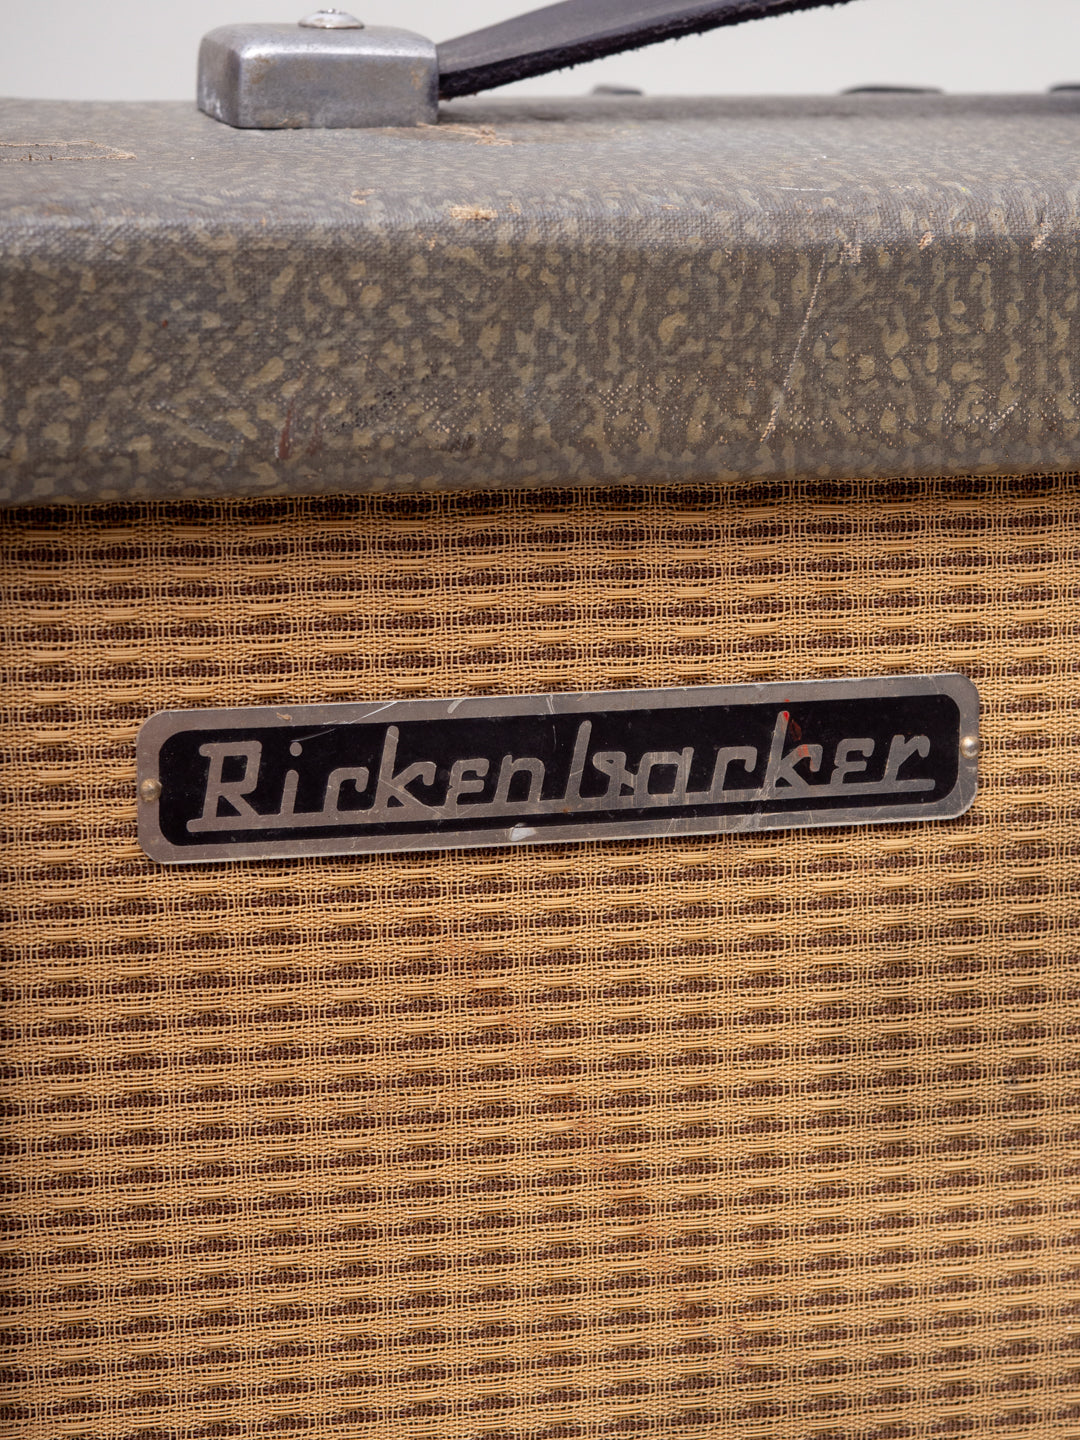 1957 Rickenbacker M-11 Amp